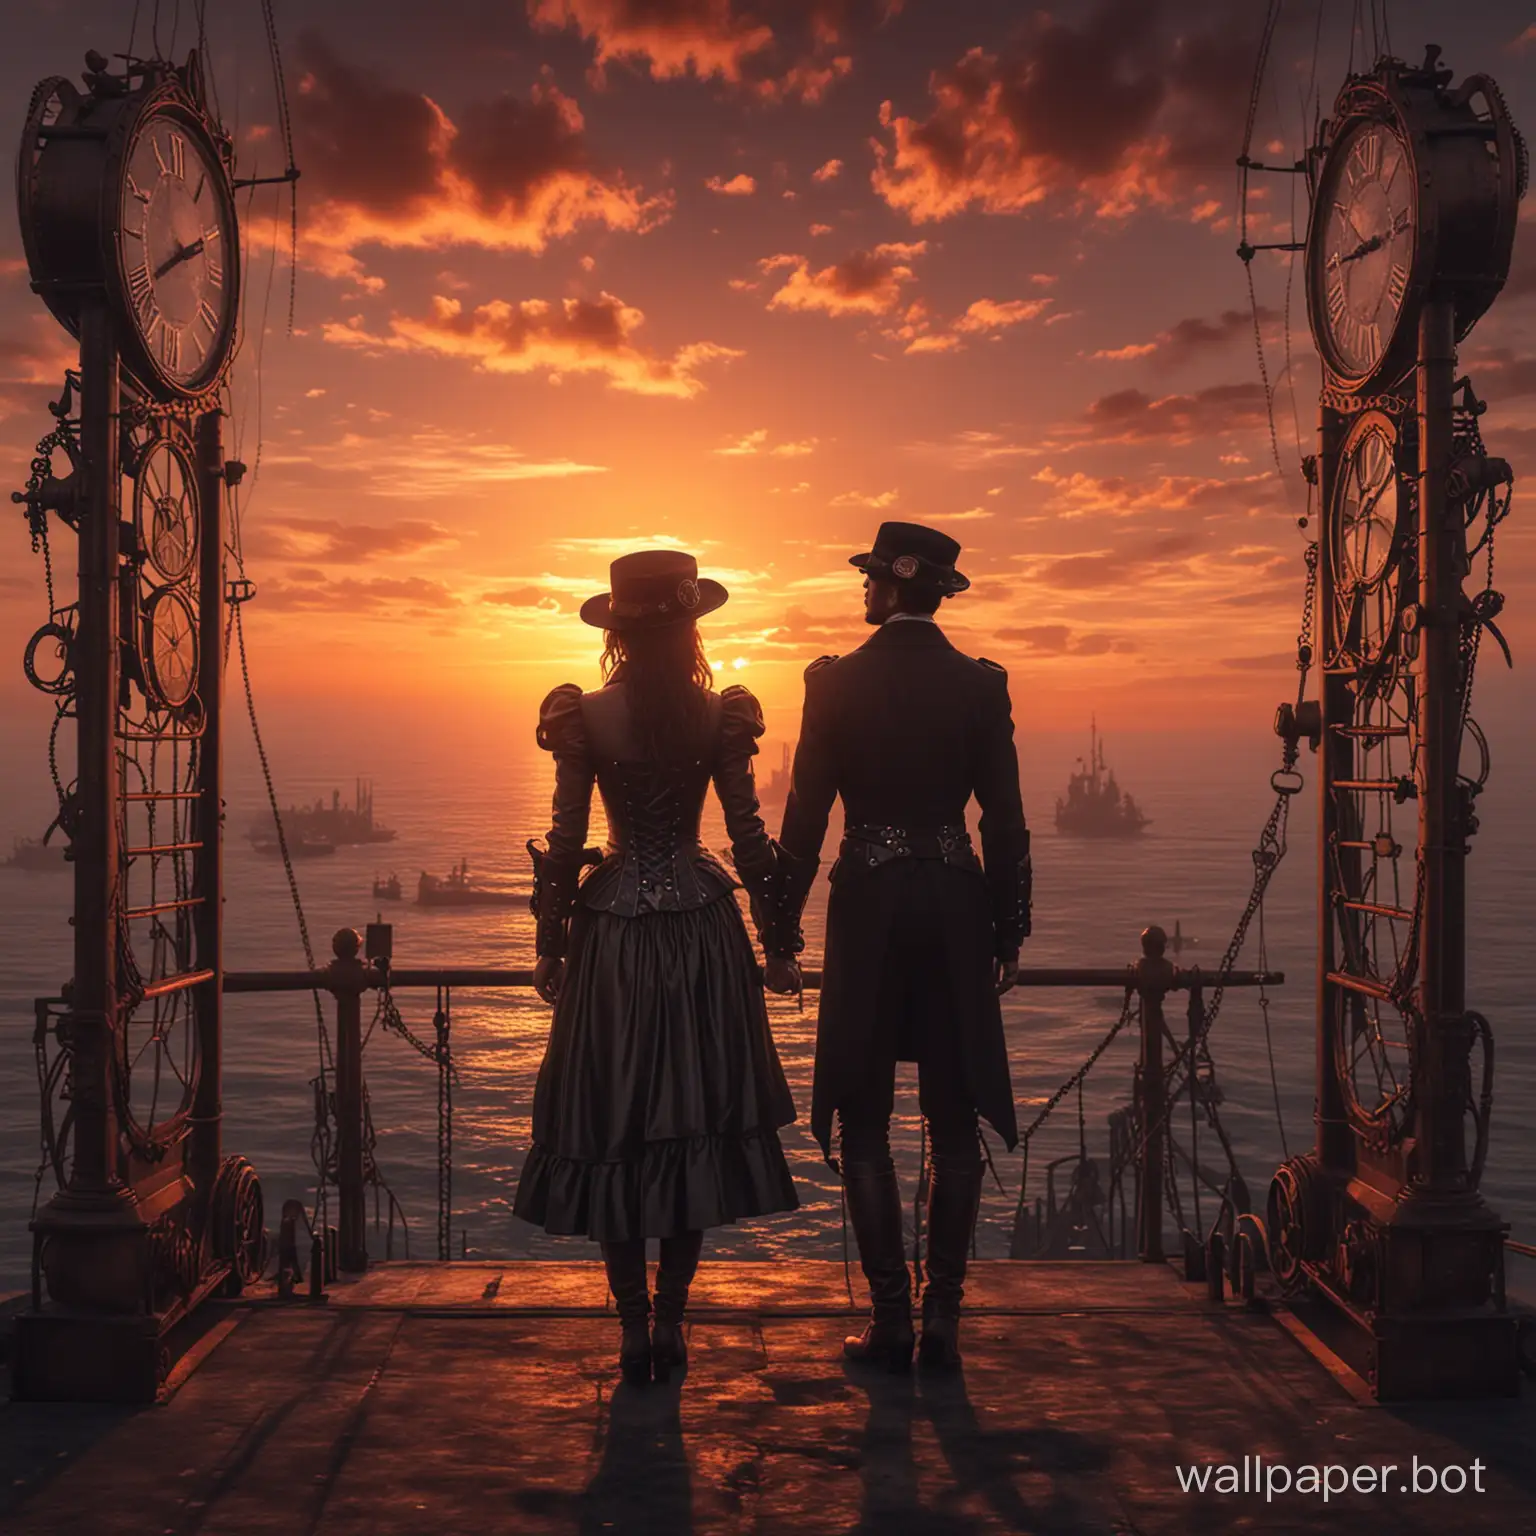 Dark romantic steampunk sunset